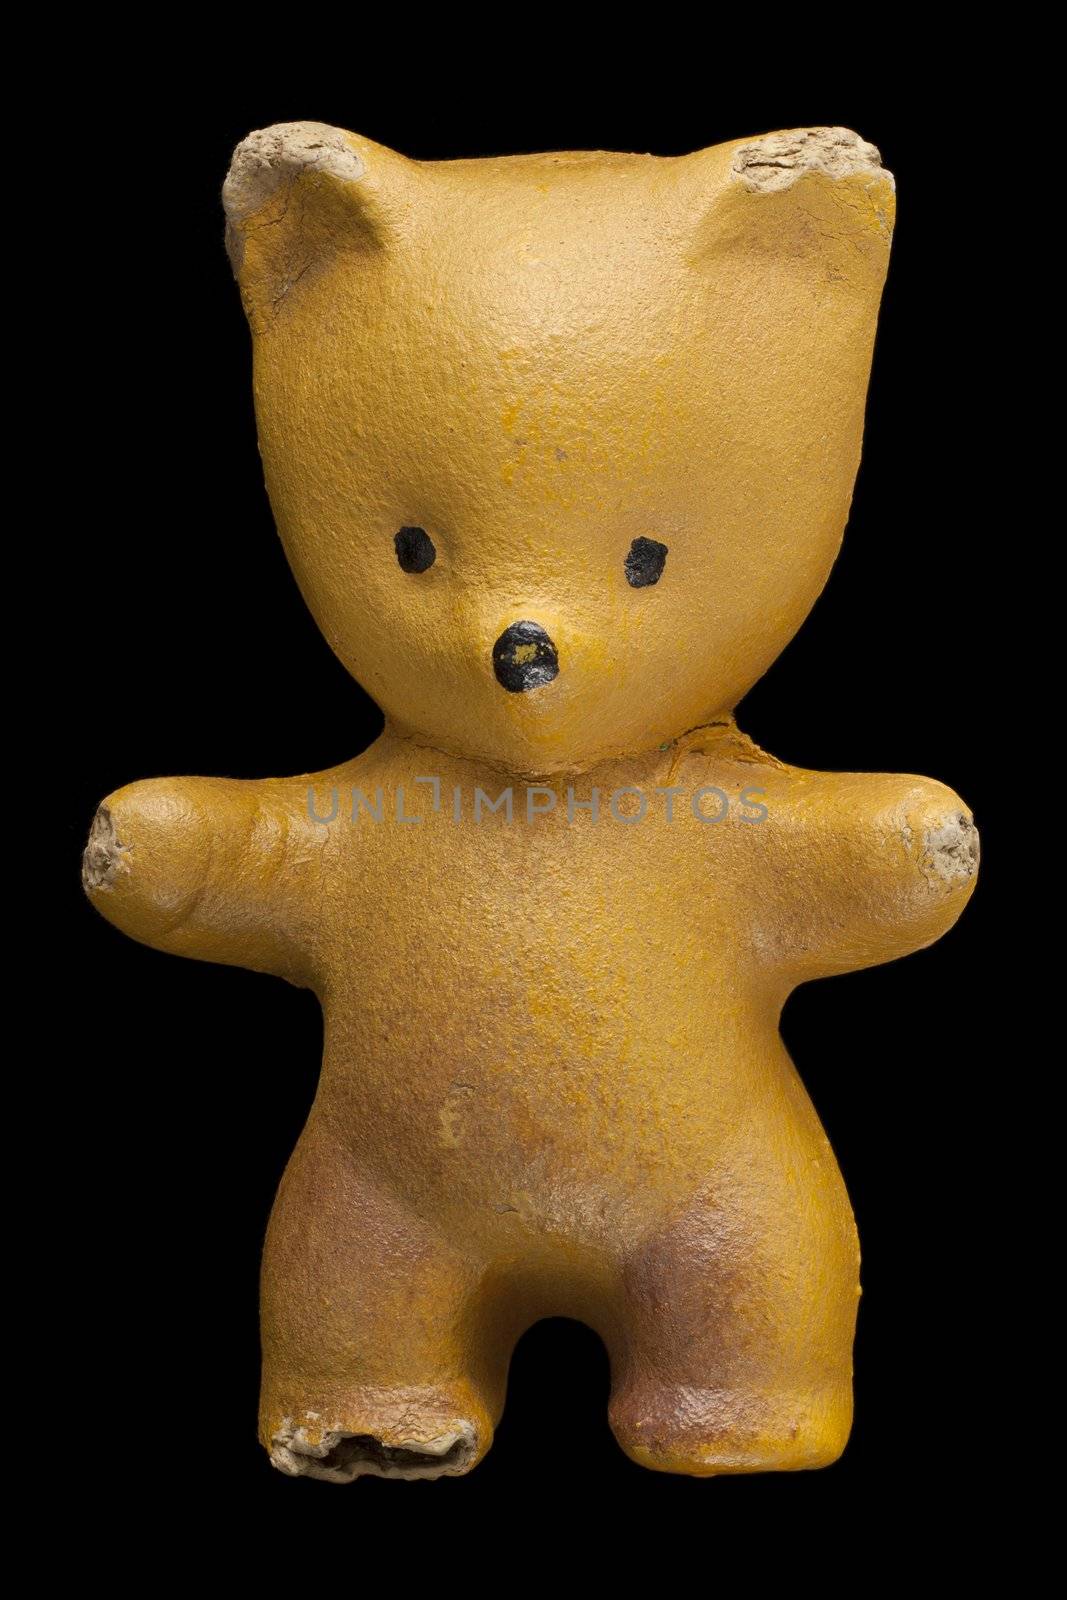 Old yellow teddy bear